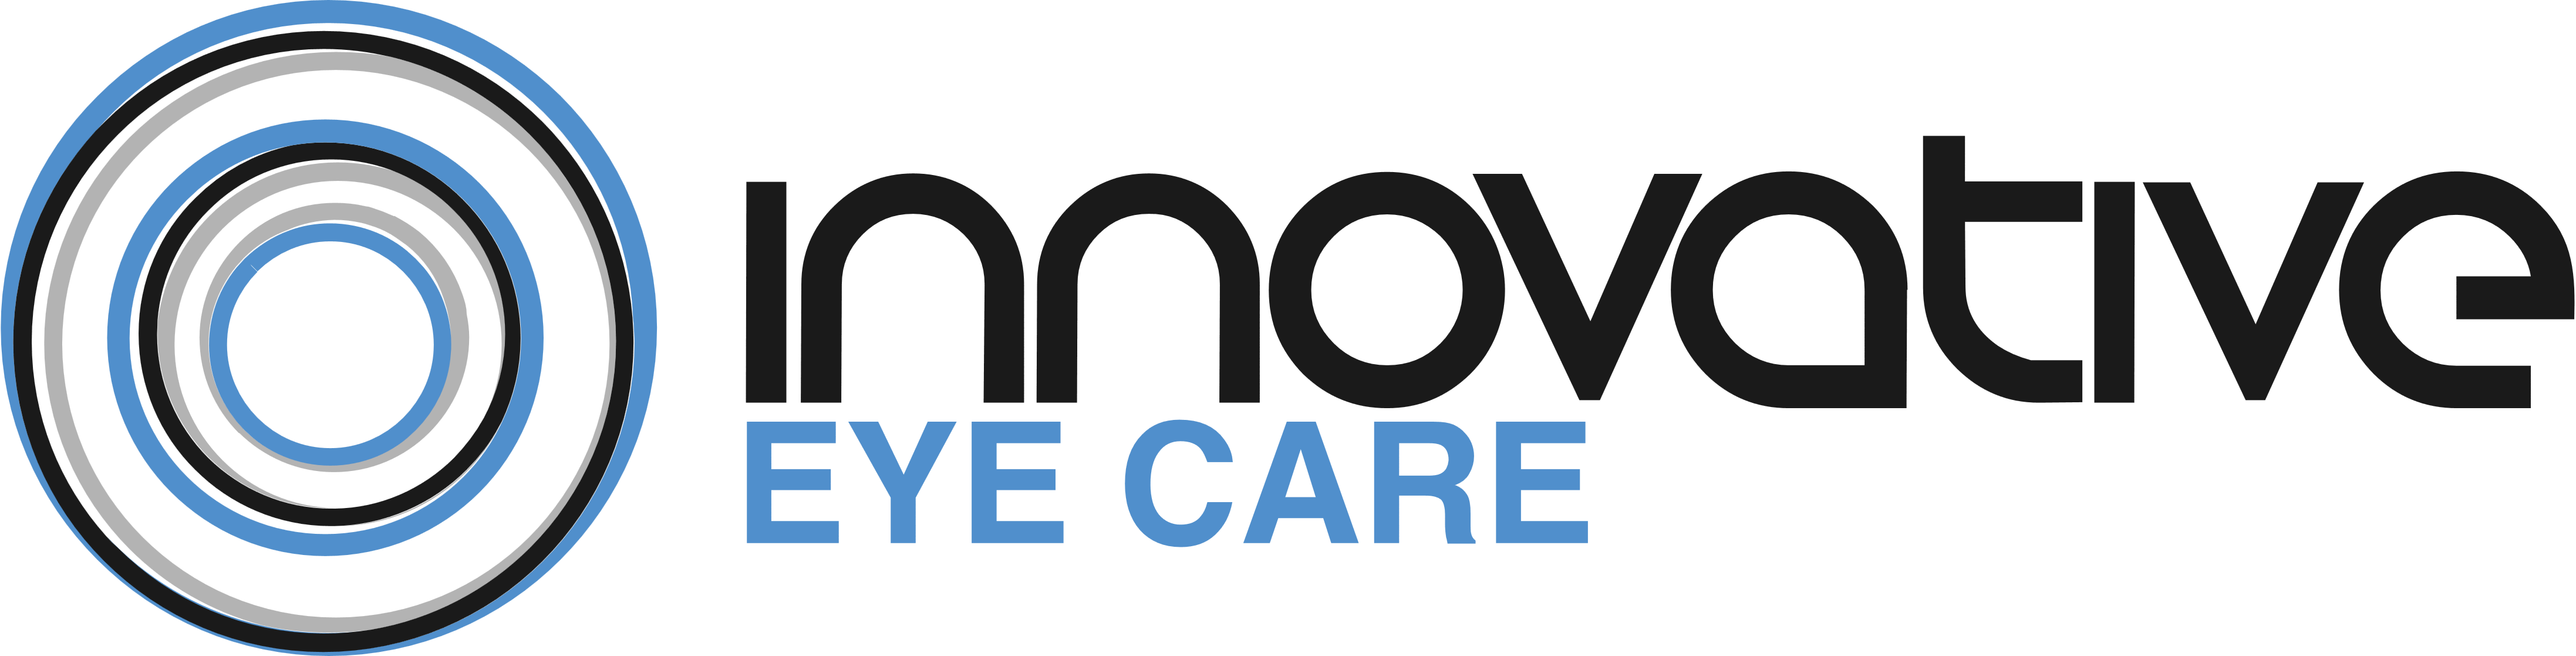 Innovative Eye Care Logo 